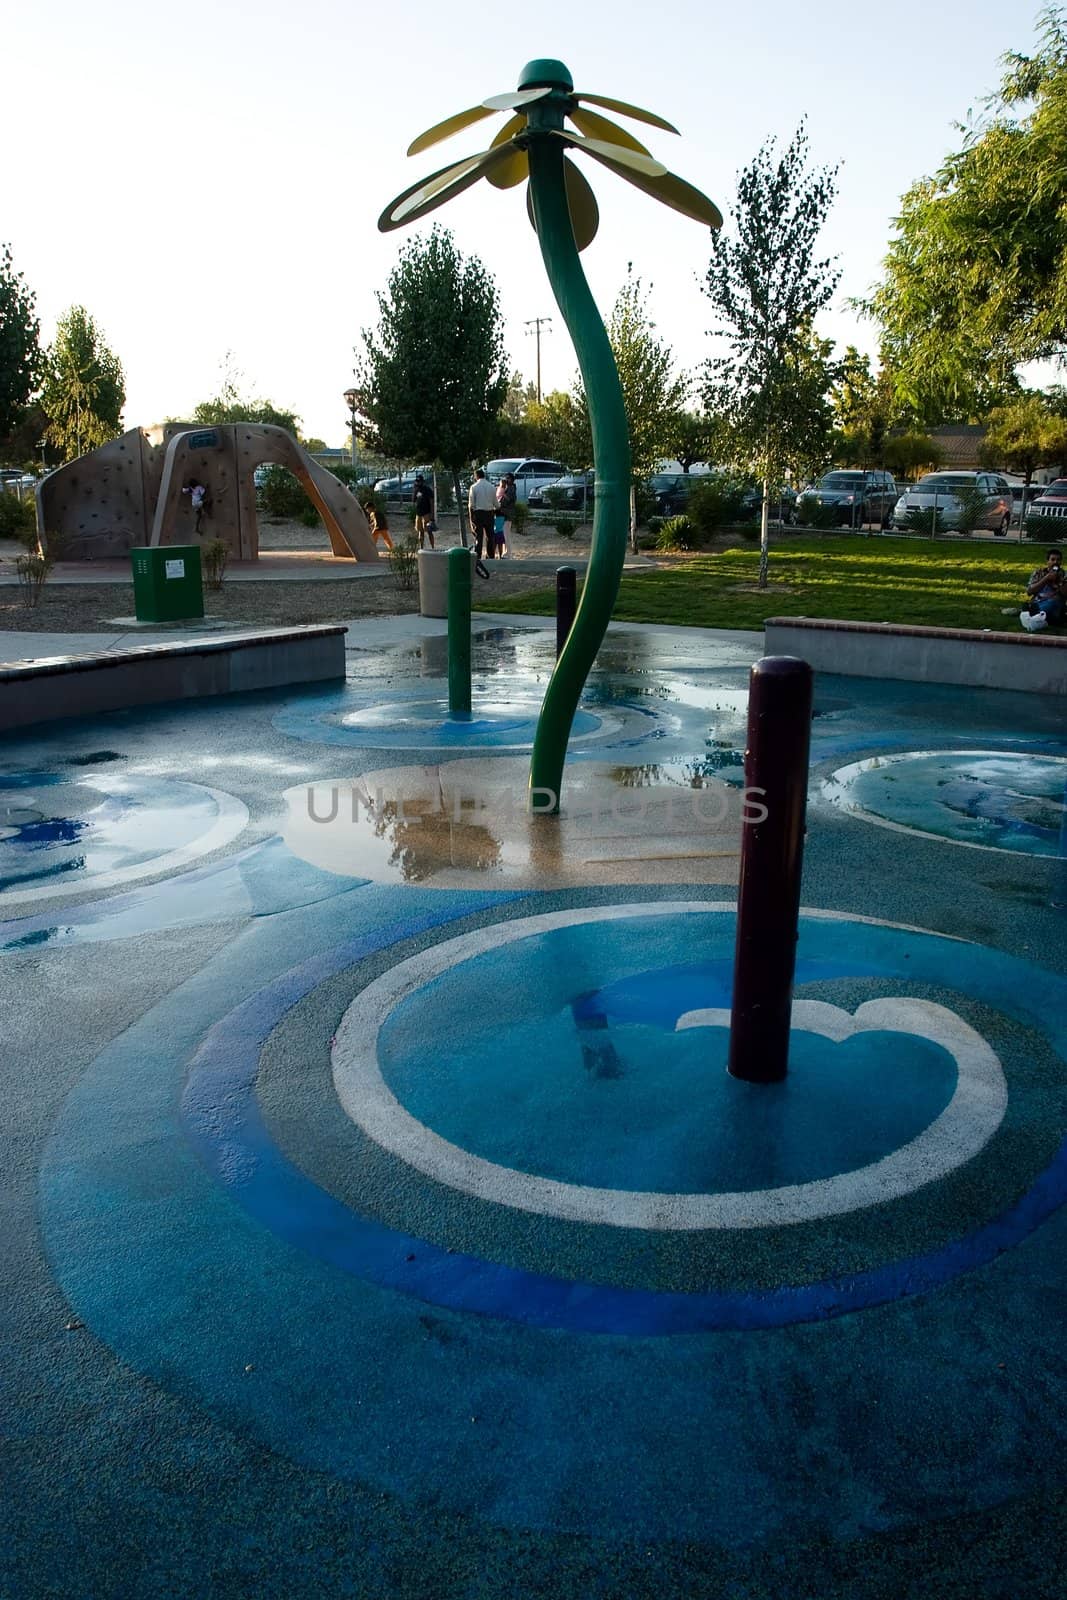 Fountain next to children's playground in a park